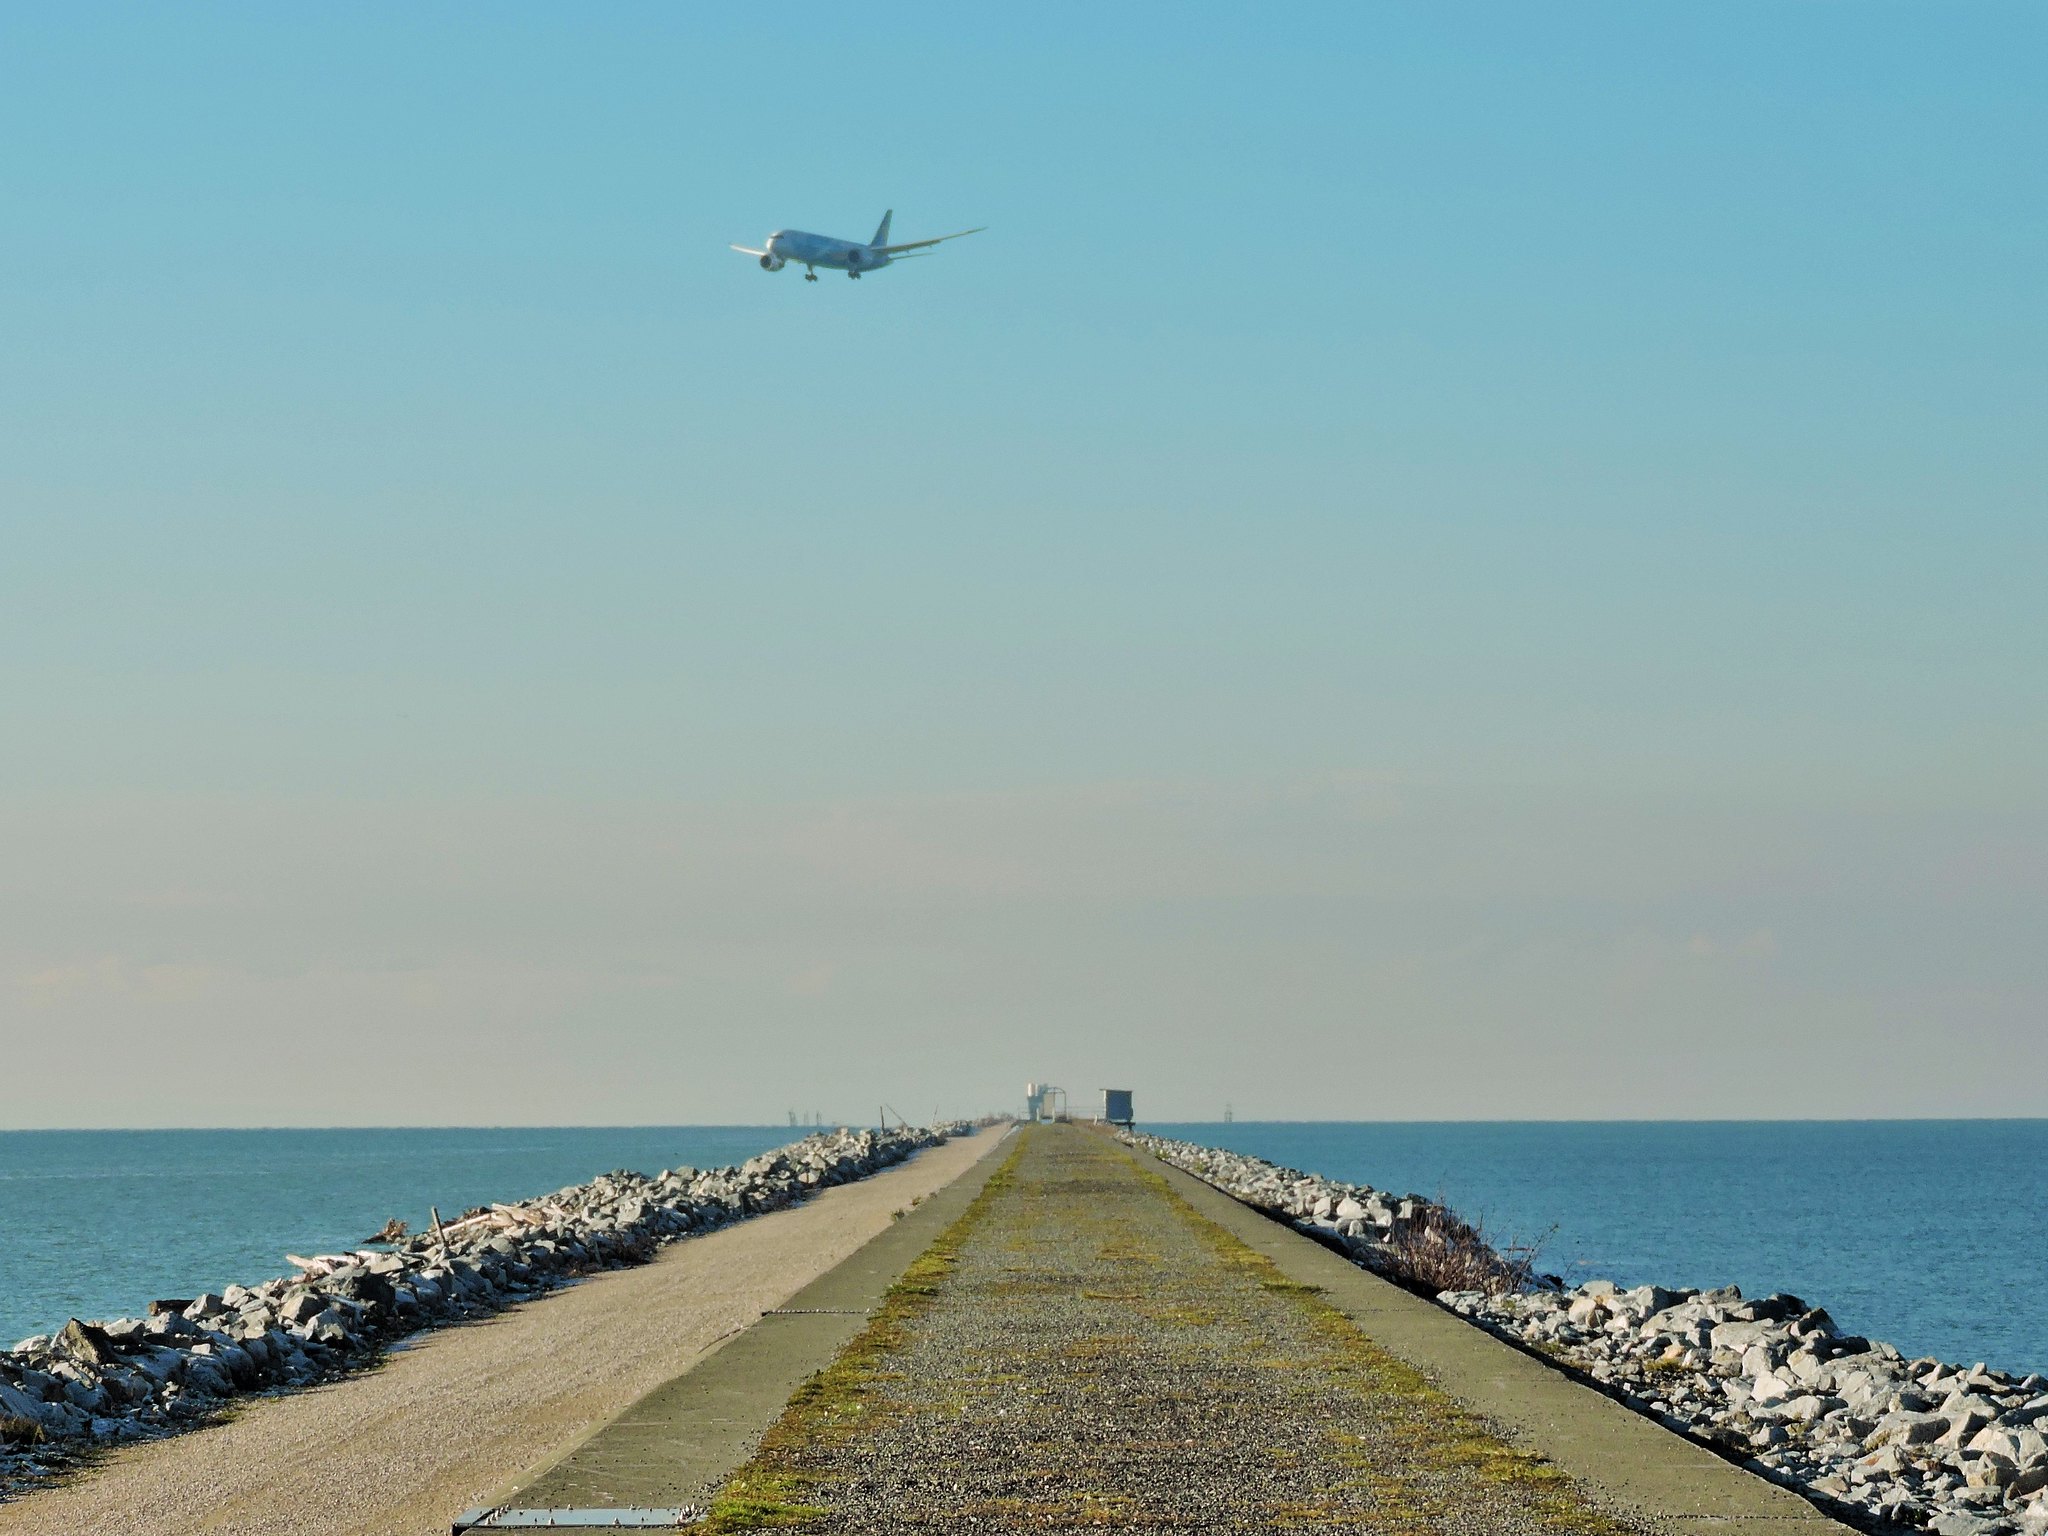 漫步長堤觀看飛機往來。（照片來源：Flickr/cc/Mike W.）